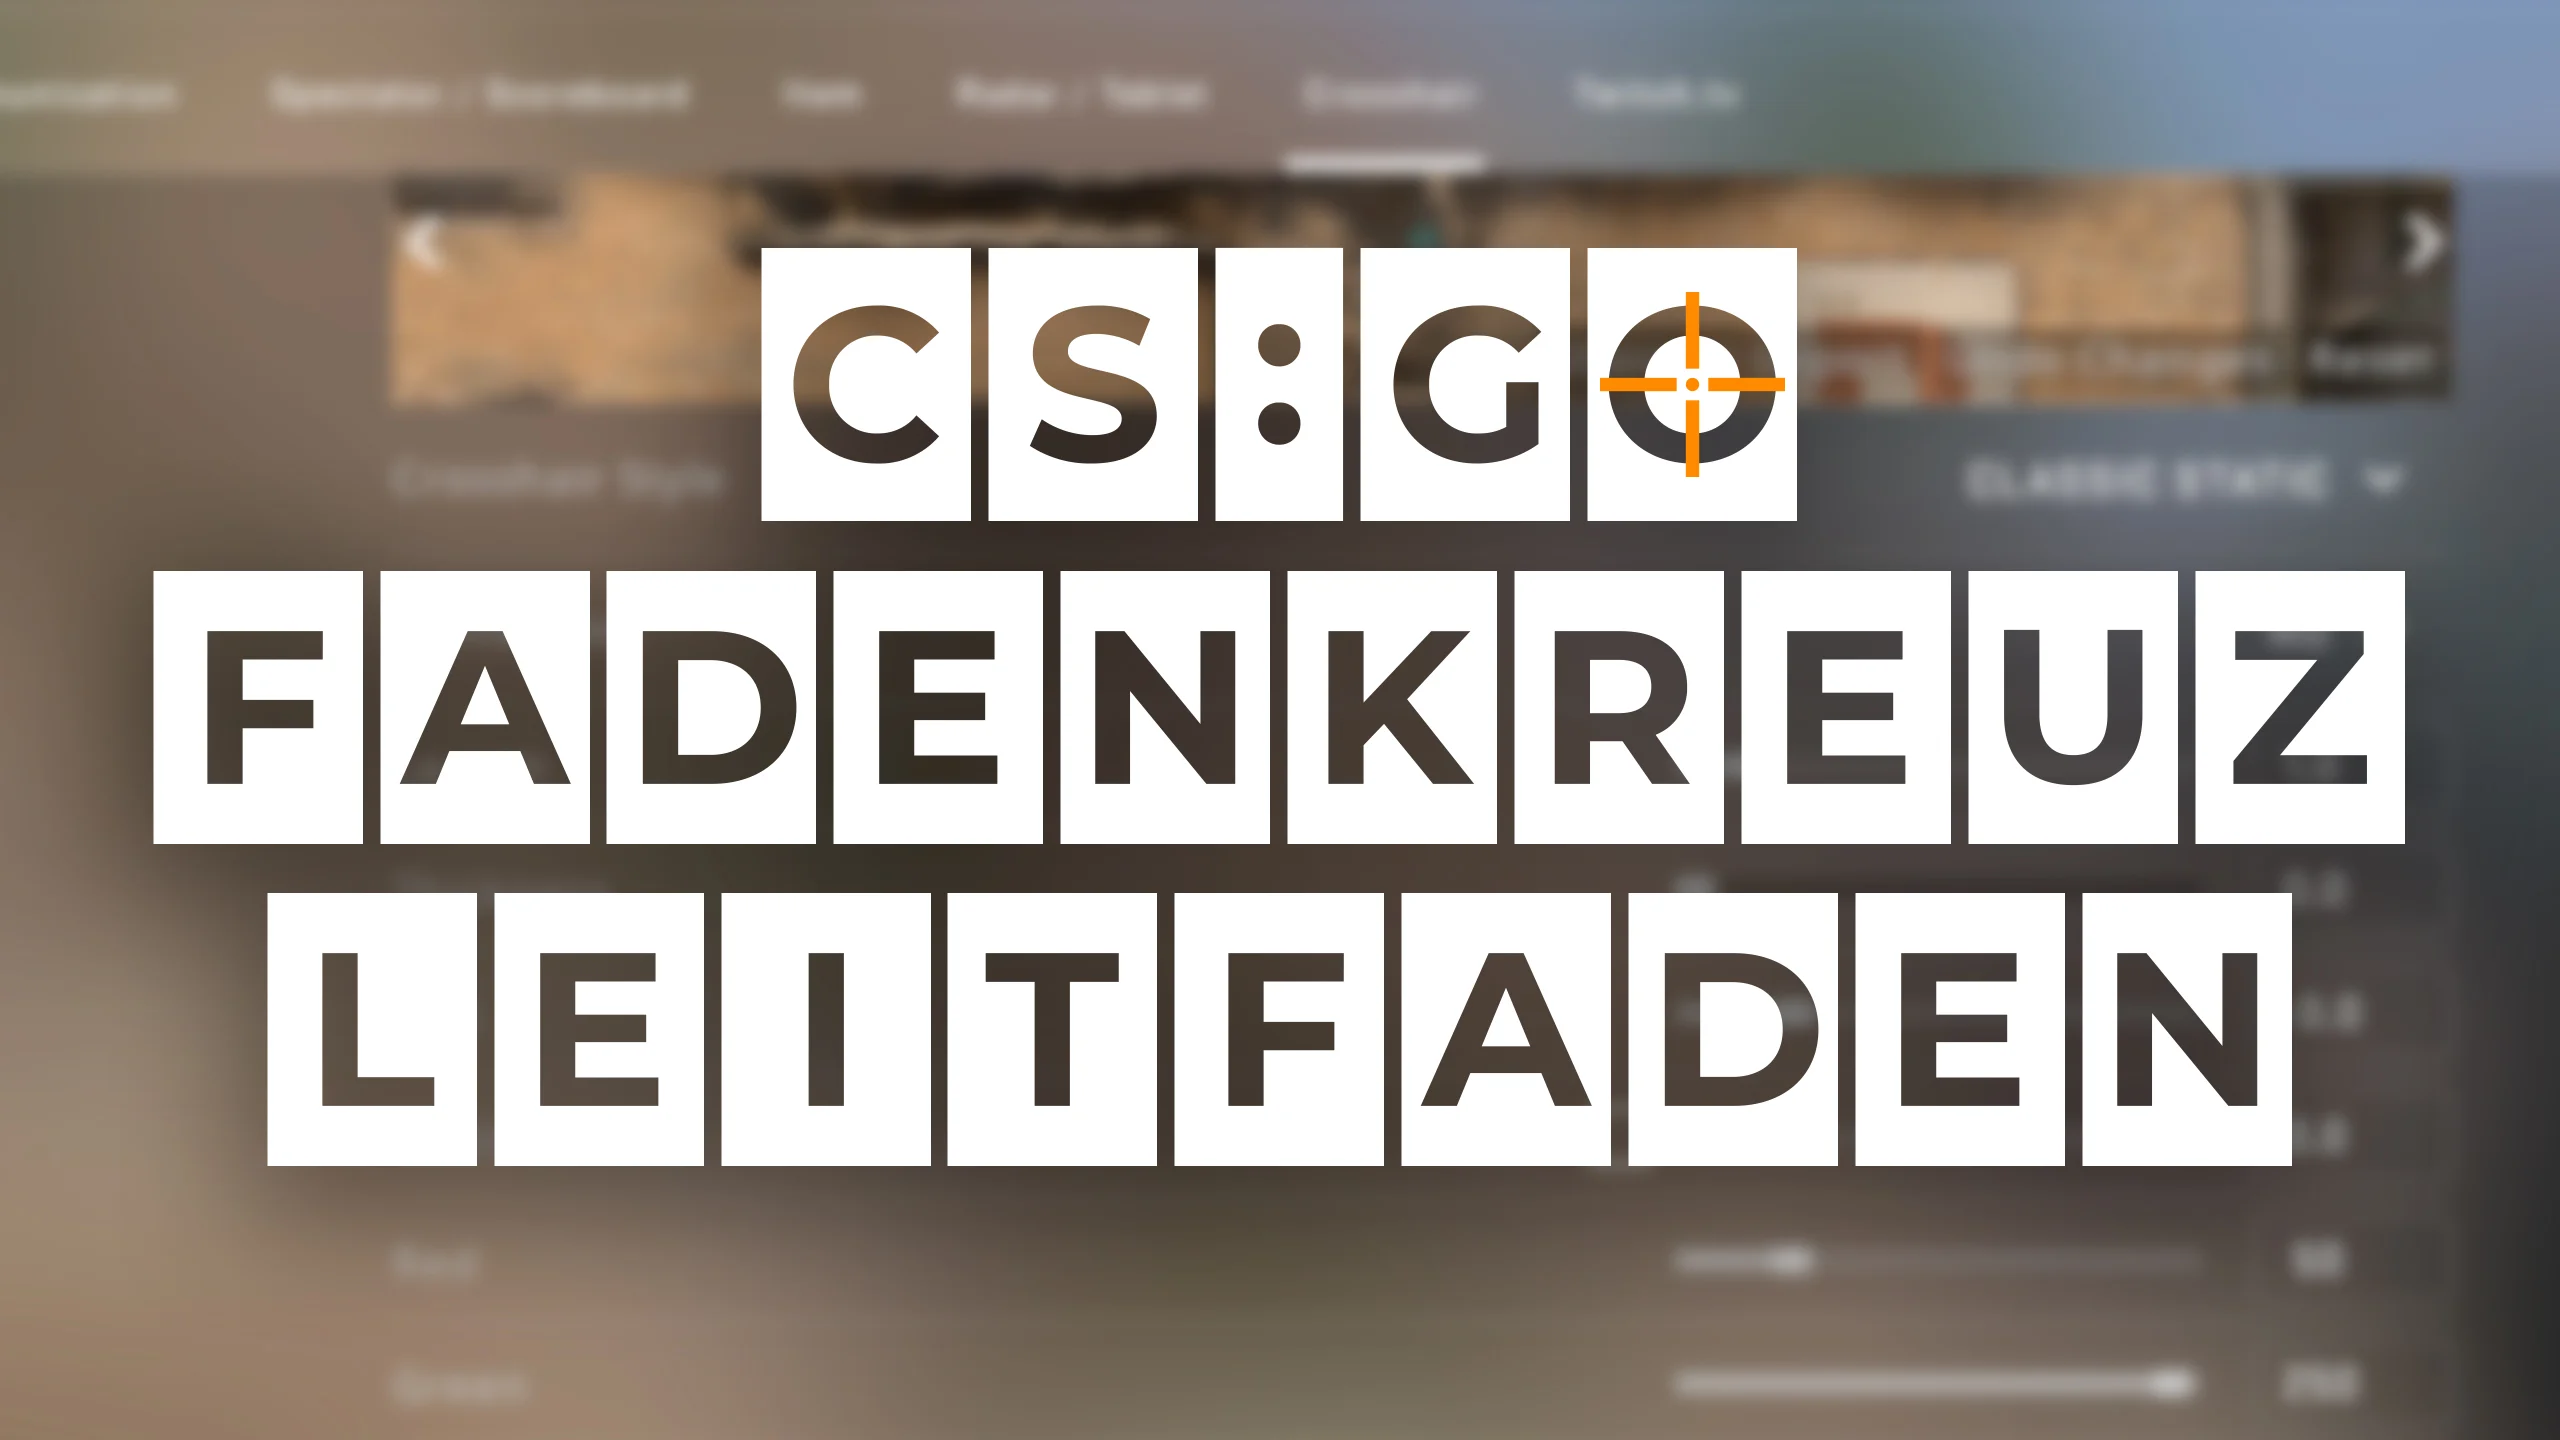 Der ultimative CS:GO Fadenkreuz-Leitfaden